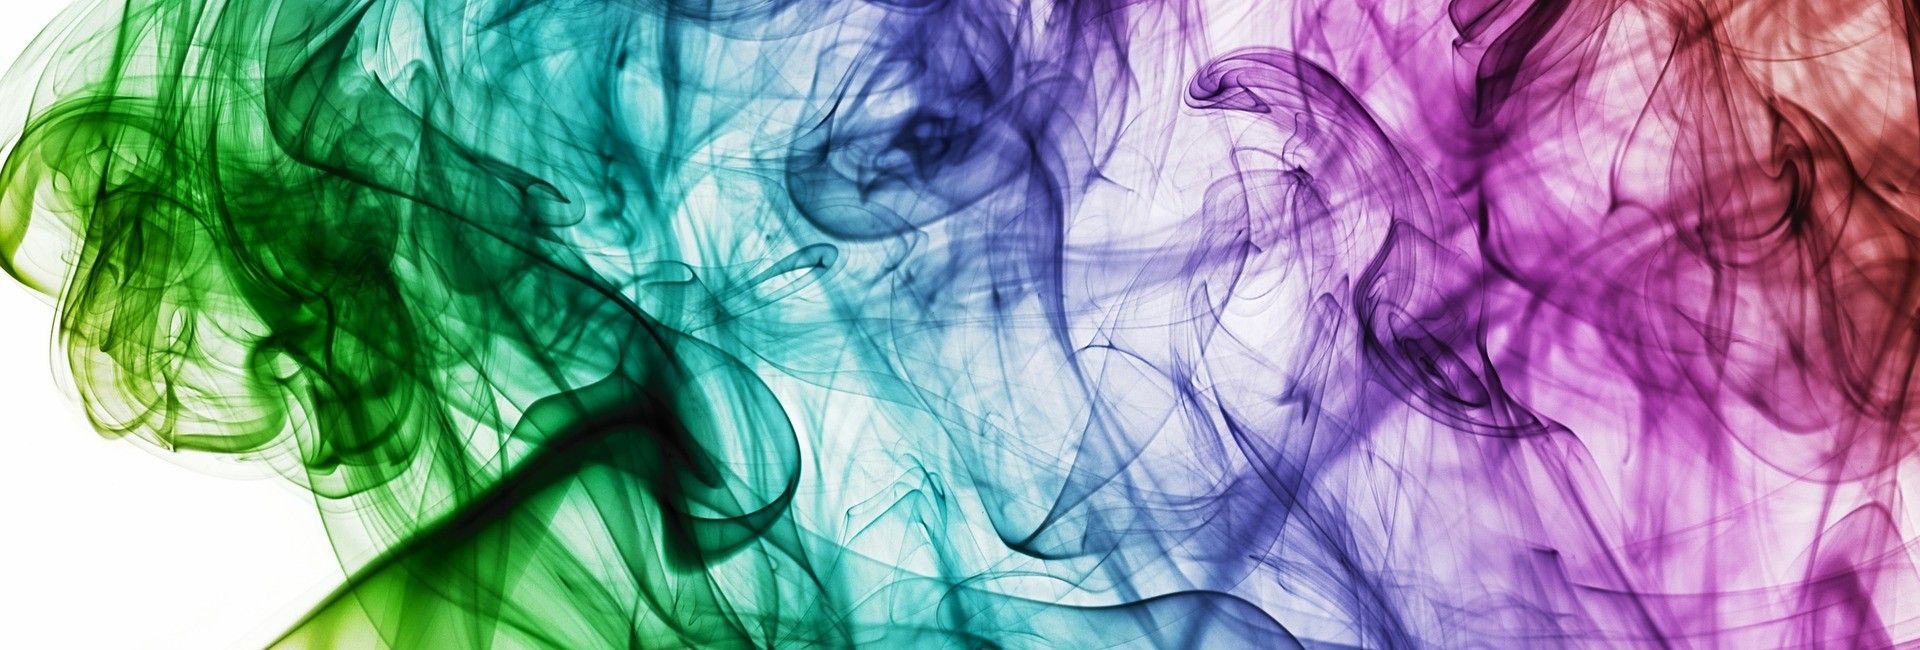 Colour Smoke Rainbow royalty-free stock illustration